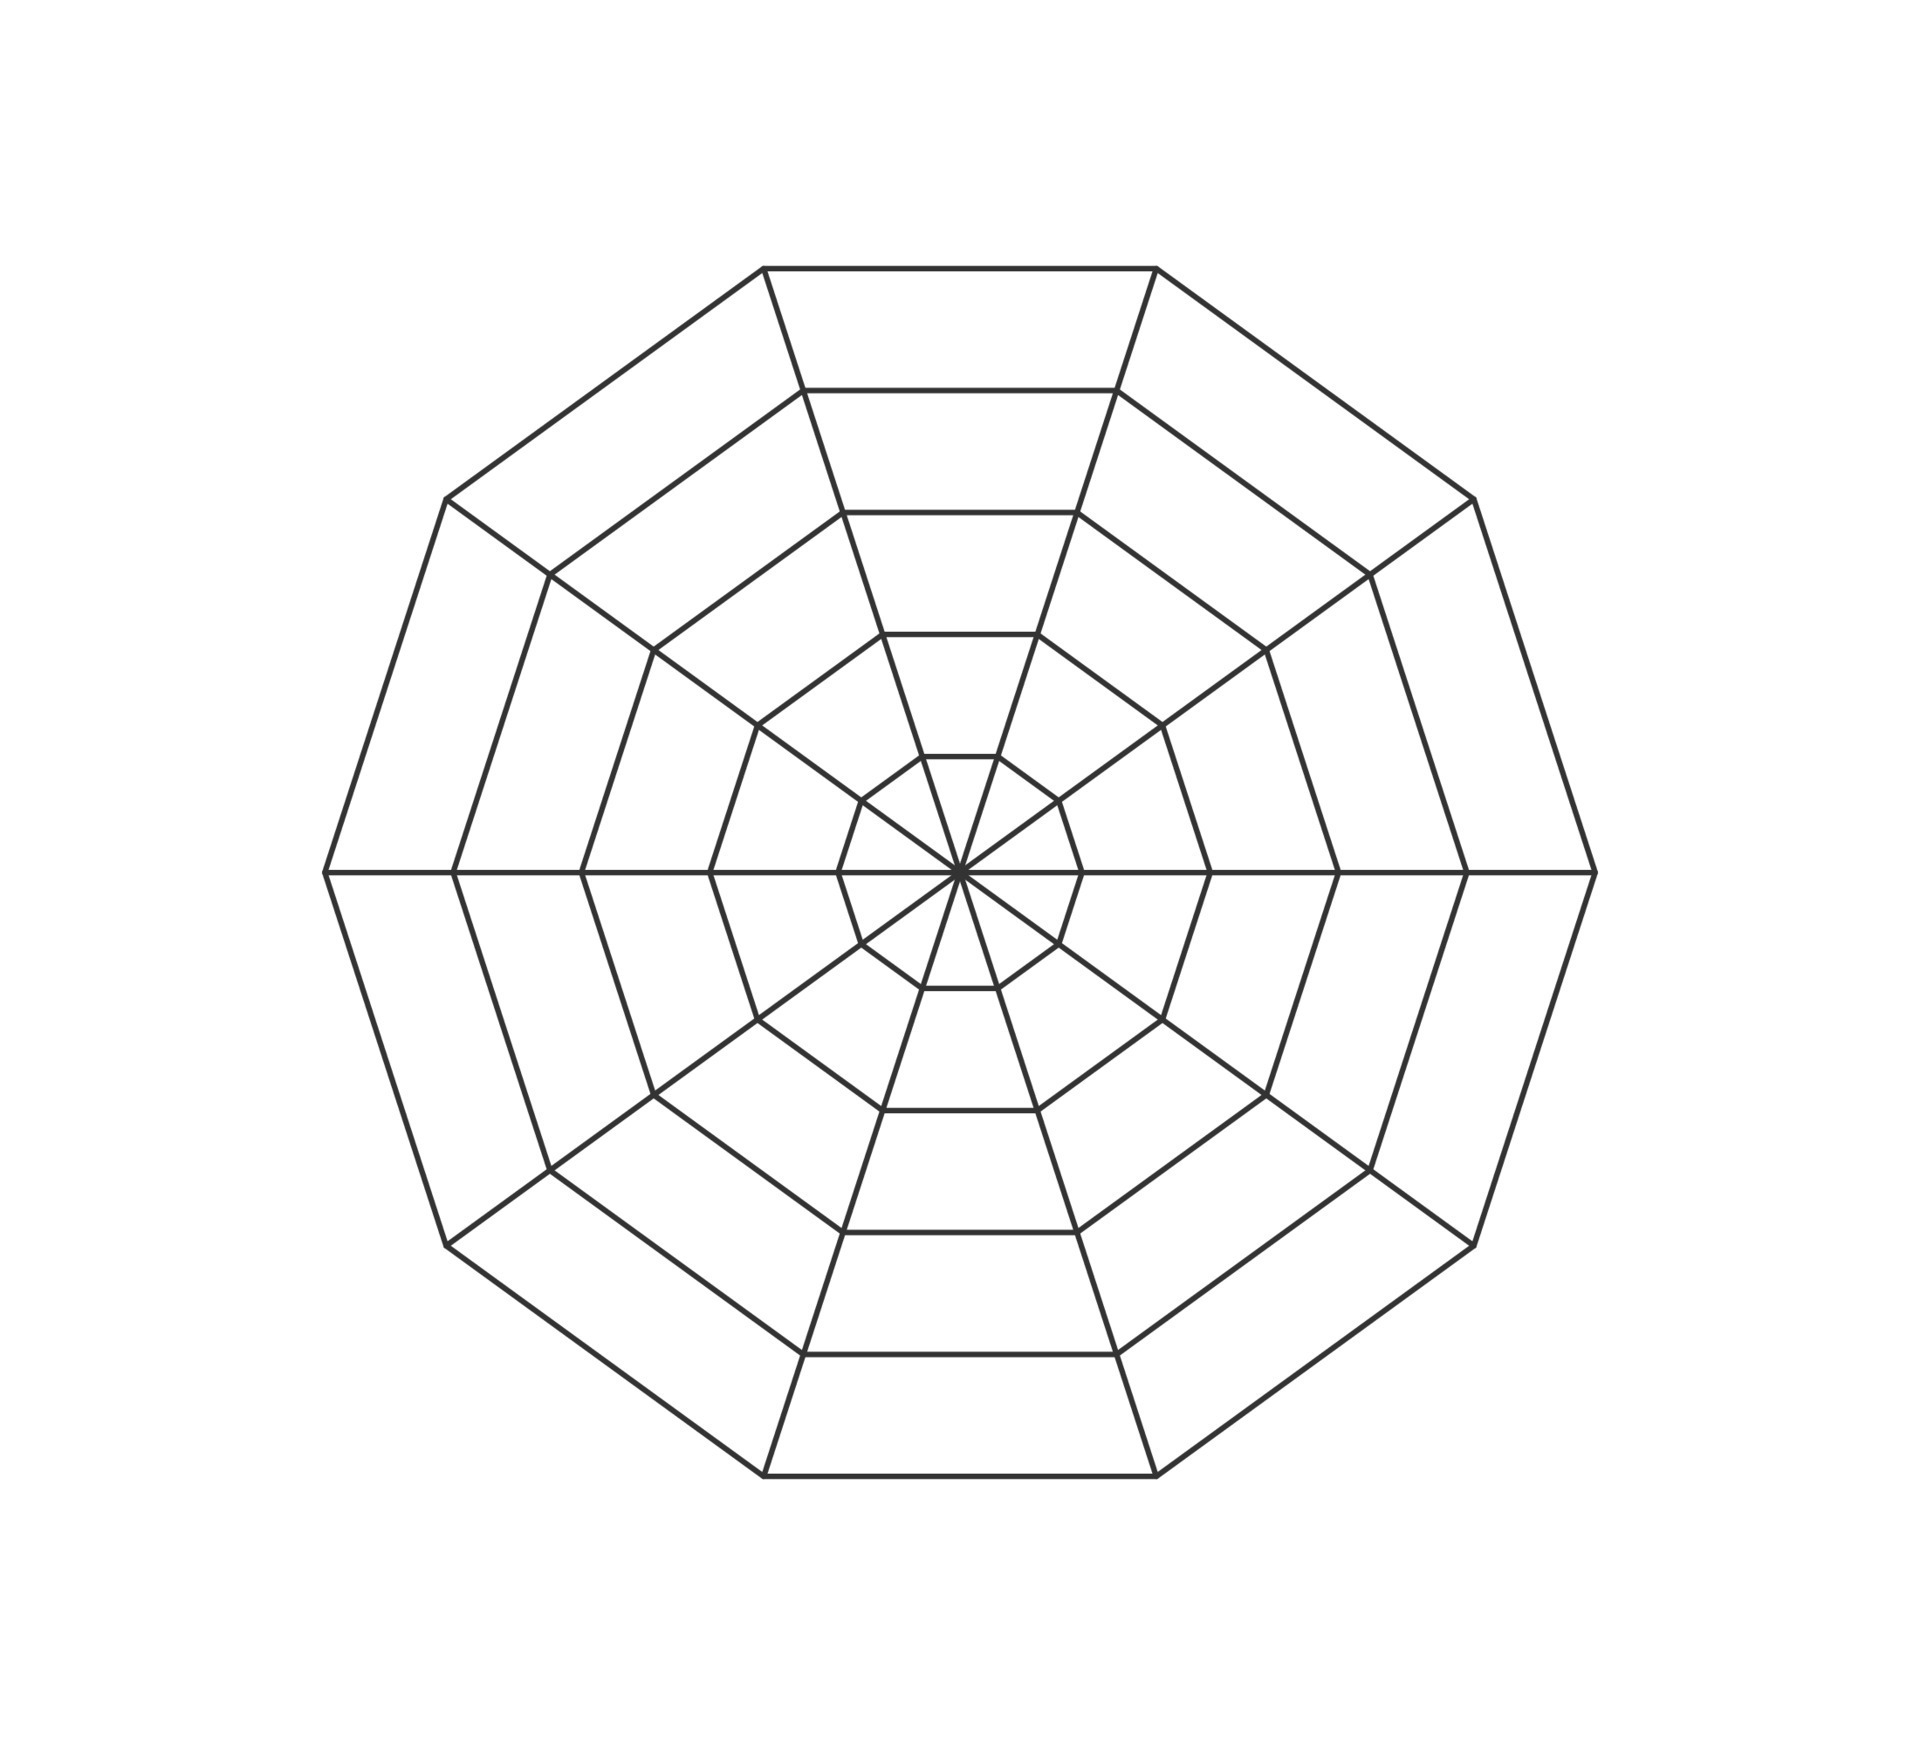 Decagonal radar or spider diagram template. Decagon graph